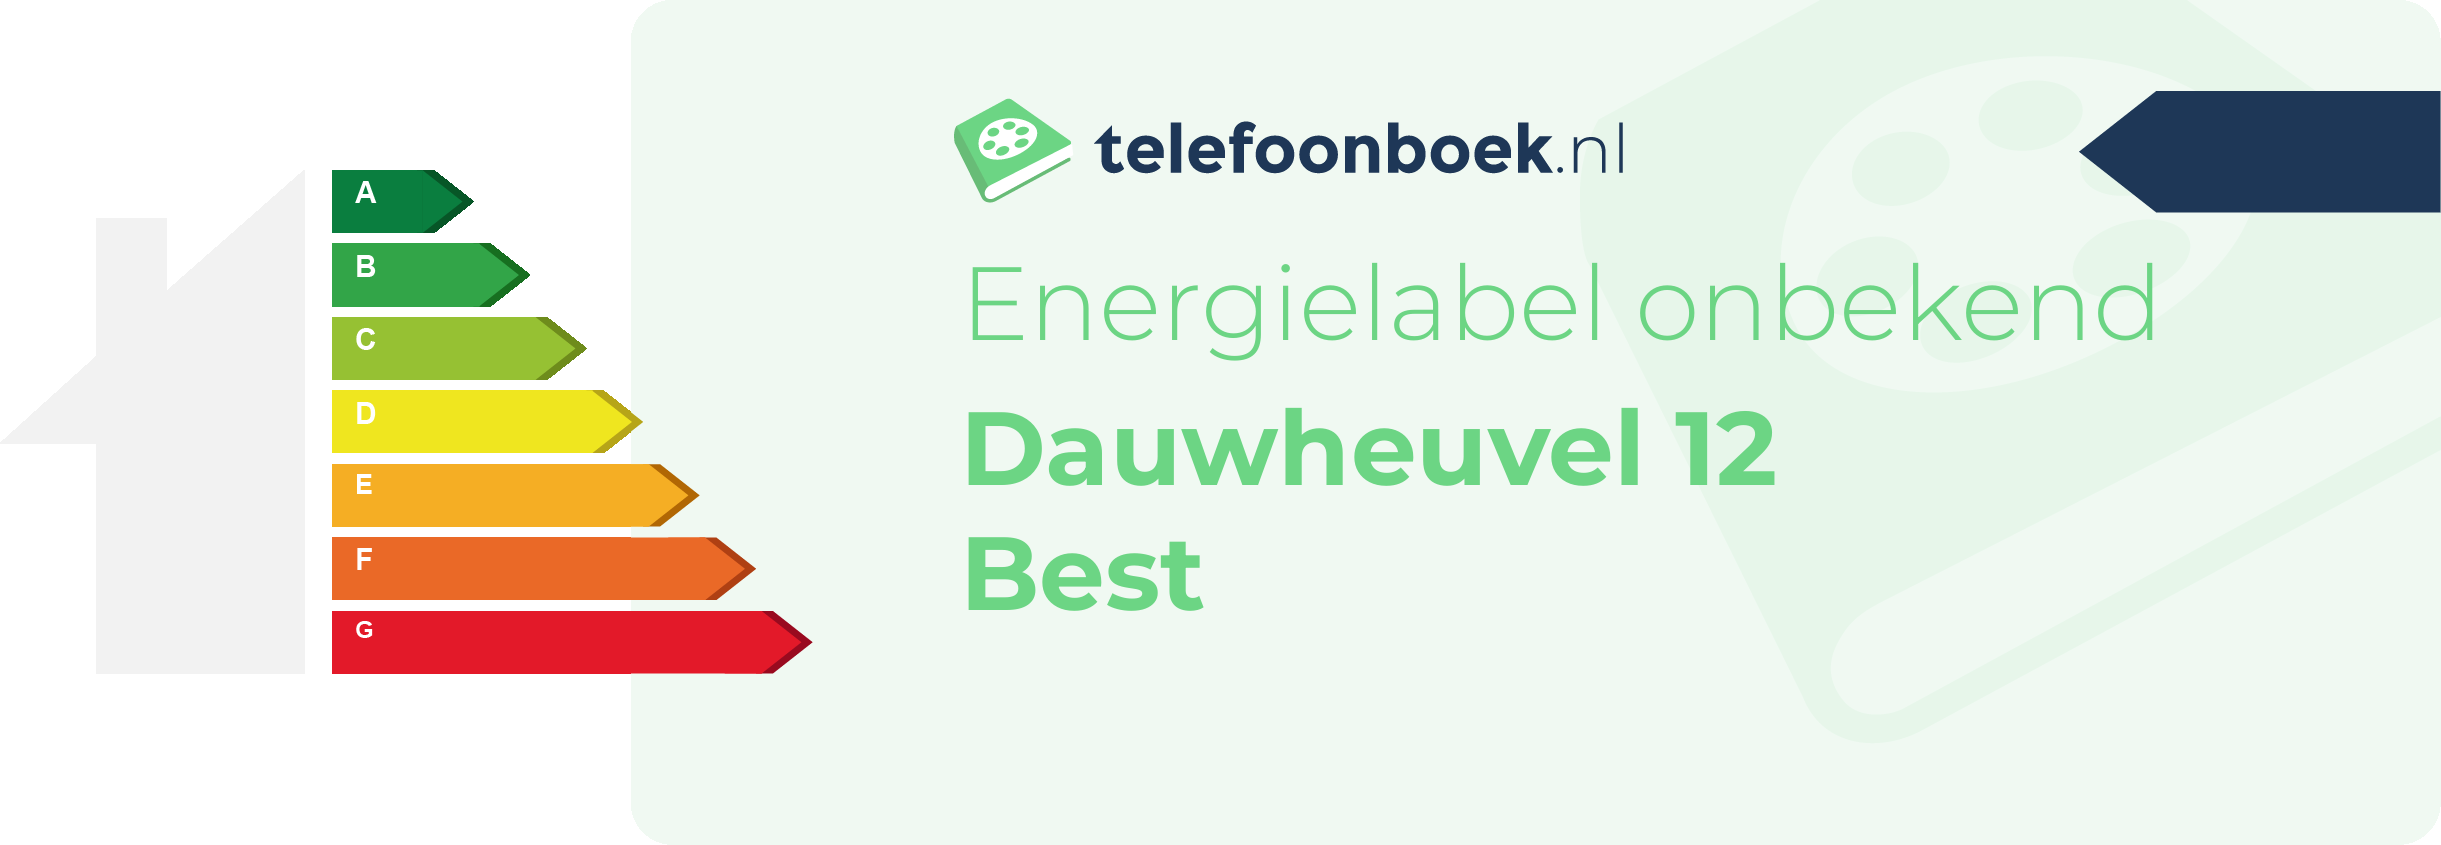 Energielabel Dauwheuvel 12 Best